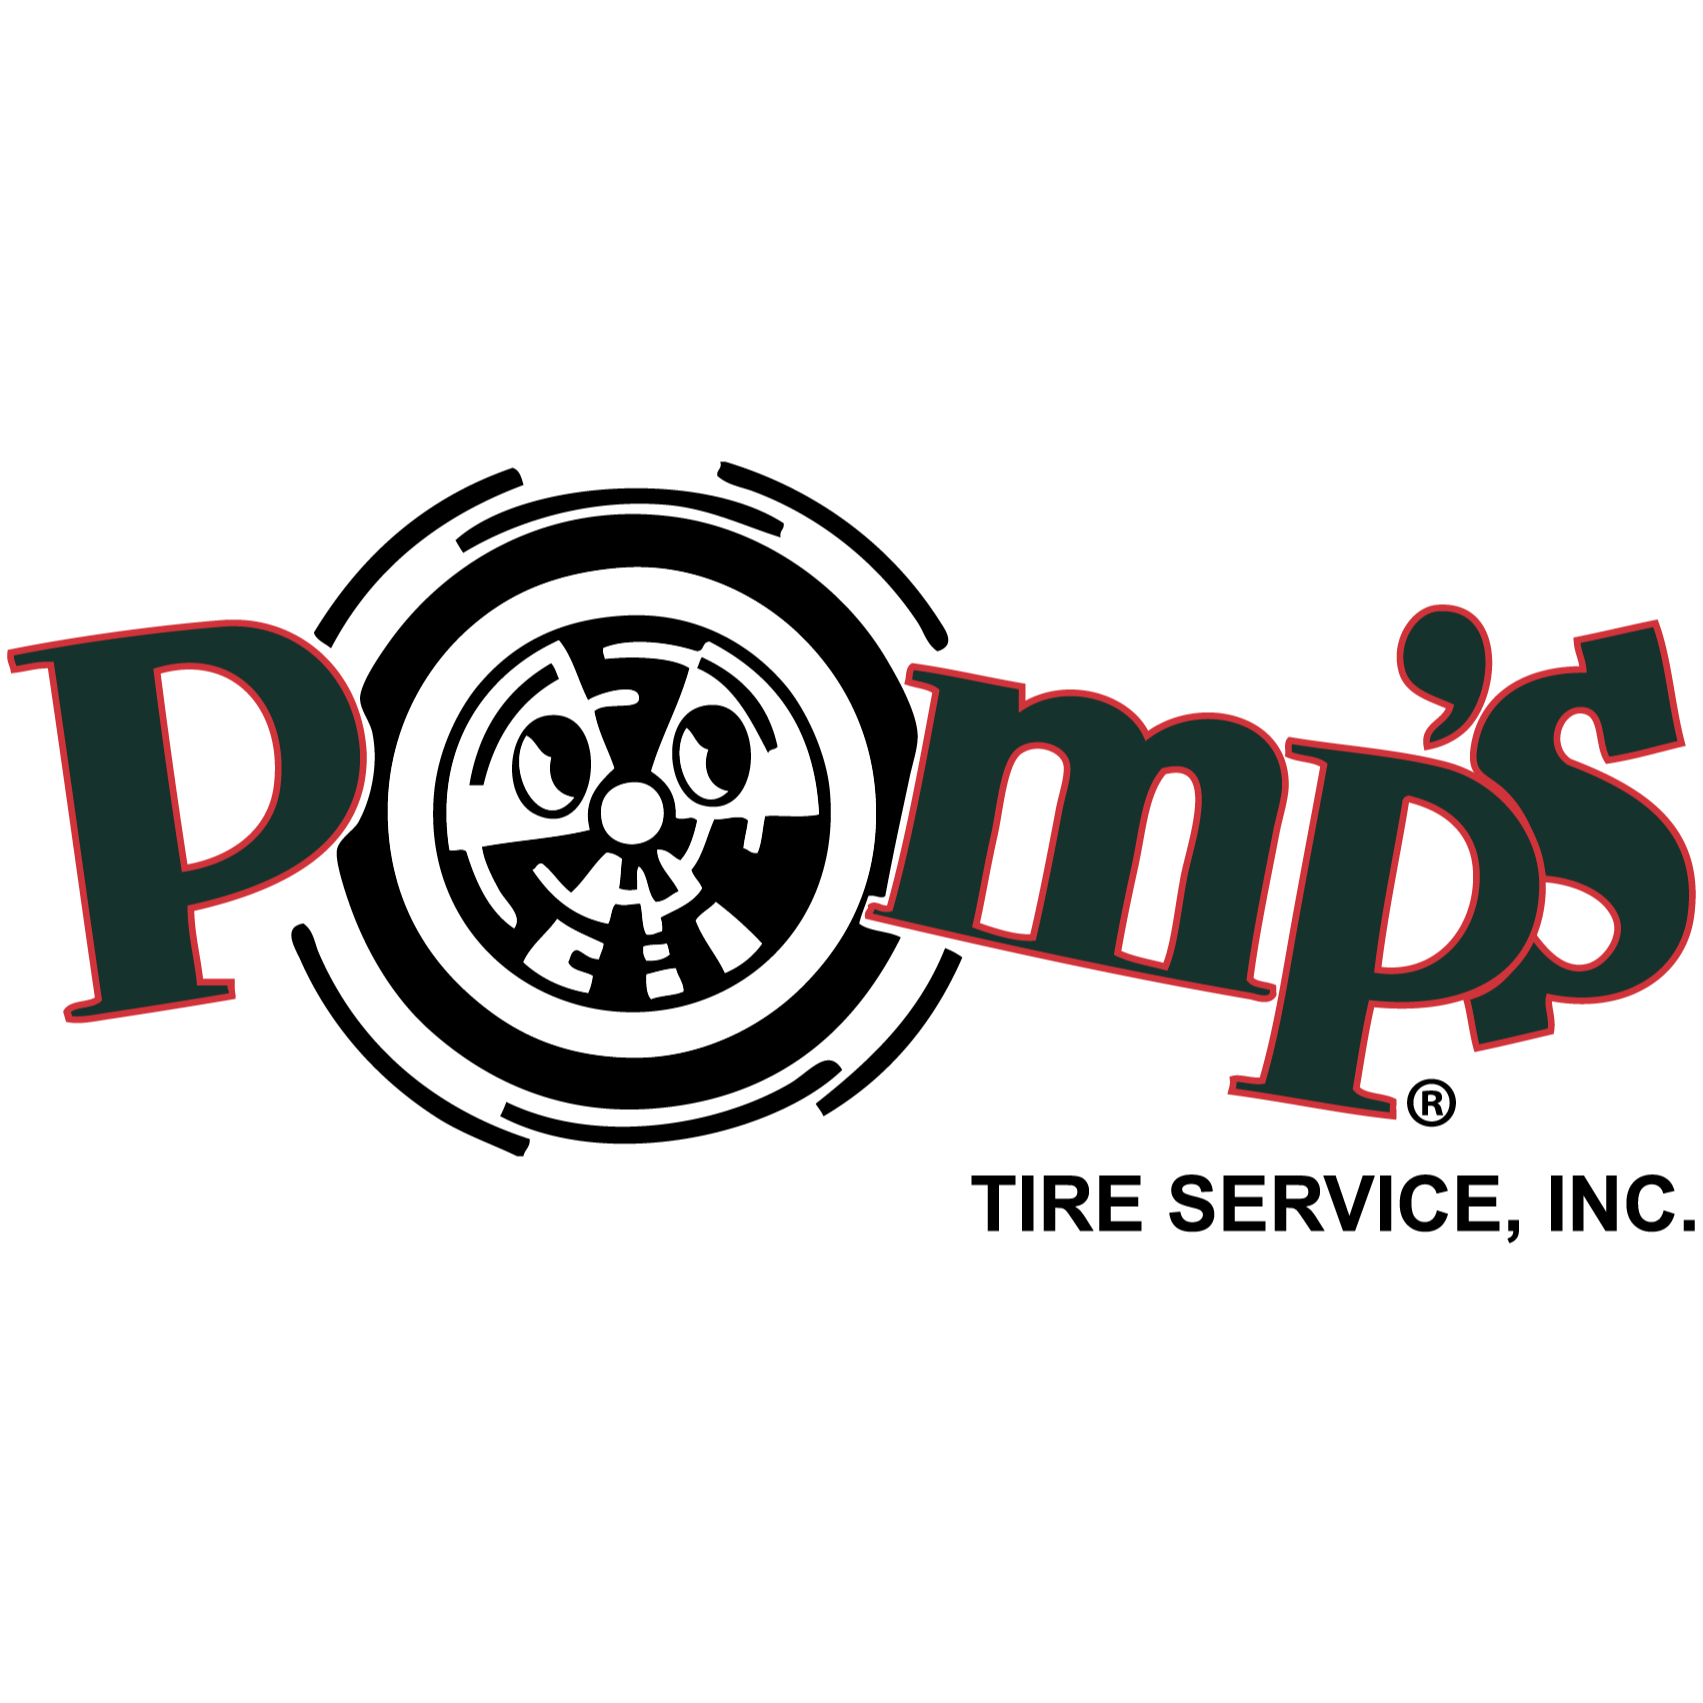 Pomp's Tire Service - Kalamazoo, MI 49001 - (269)382-2810 | ShowMeLocal.com